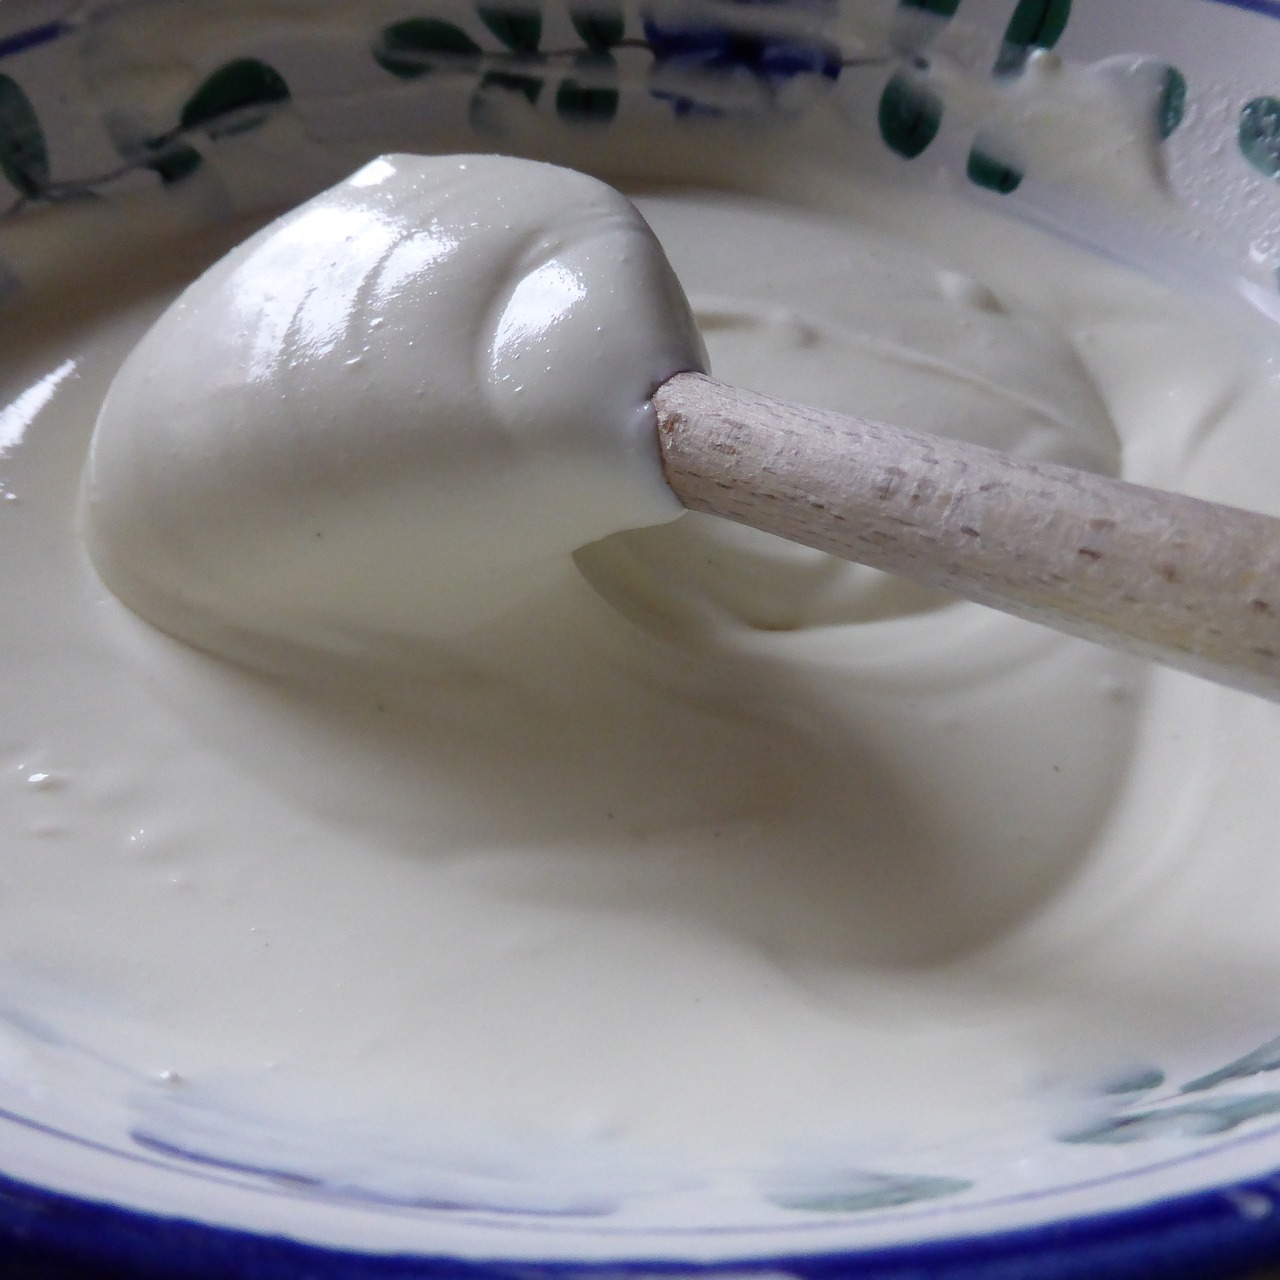 a close up of a spoon in a bowl of yogurt, inspired by Joris van der Haagen, flickr, renaissance, with celadon glaze, tutorial, plenty mozzarella, blonde cream